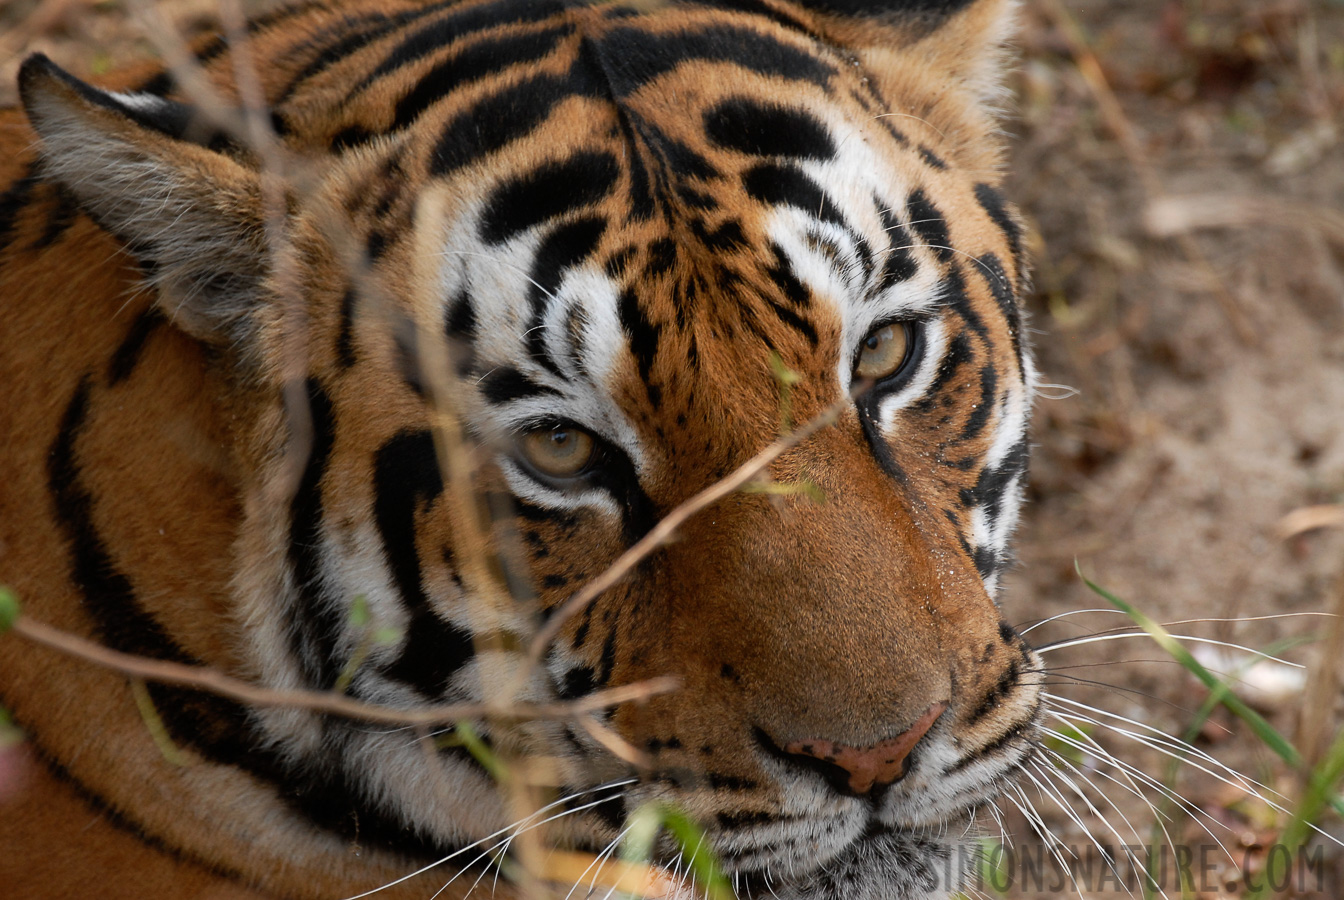 Panthera tigris tigris [380 mm, 1/160 sec at f / 6.3, ISO 400]